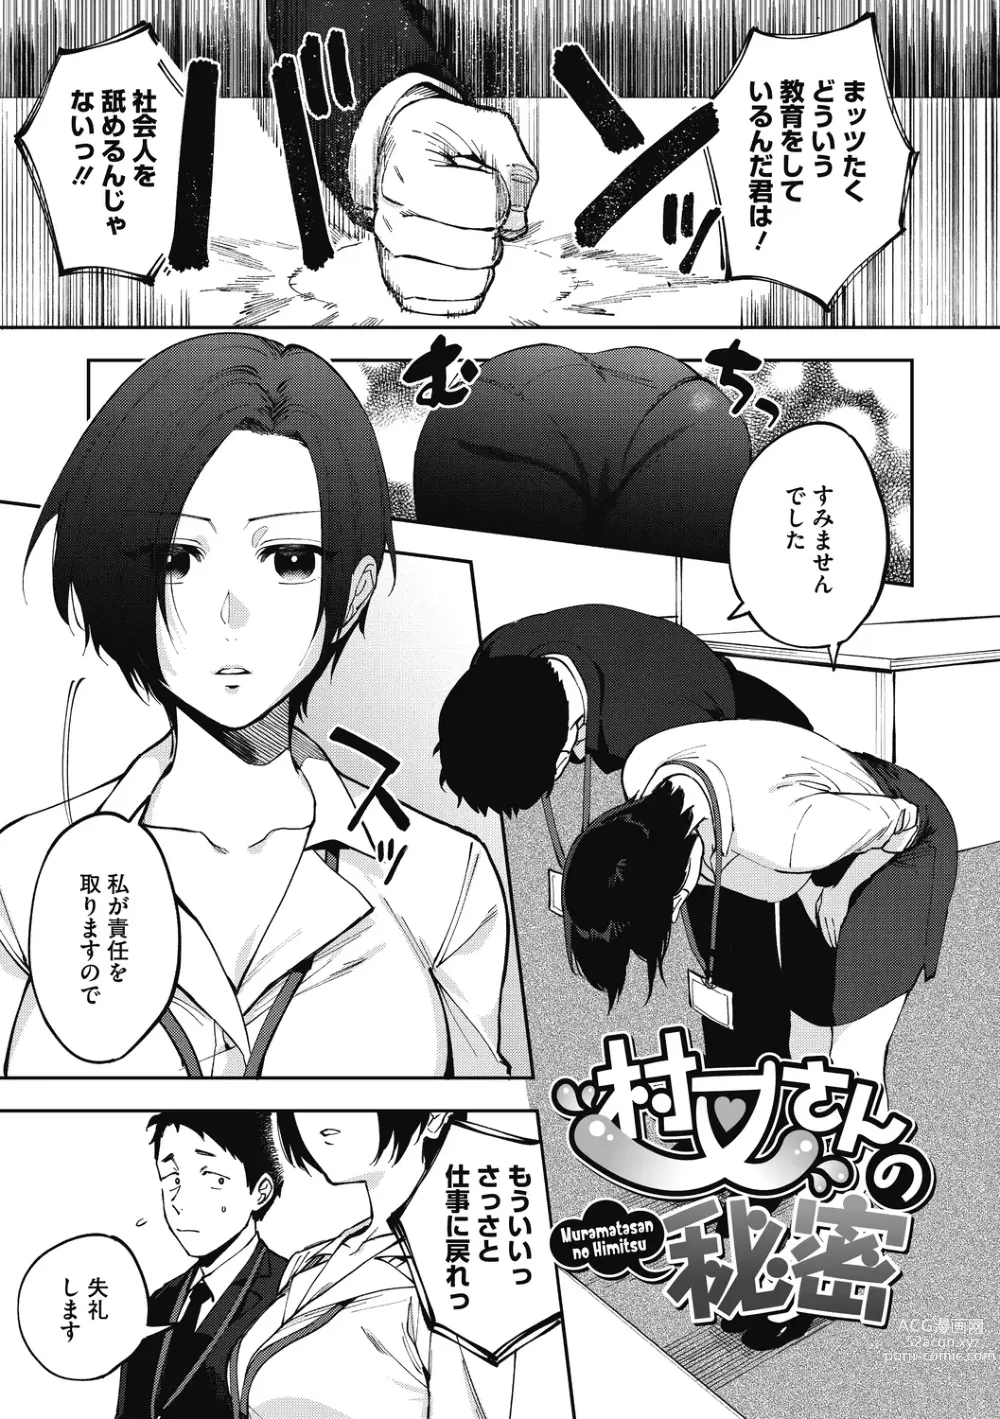 Page 7 of manga Muramata-san no Himitsu